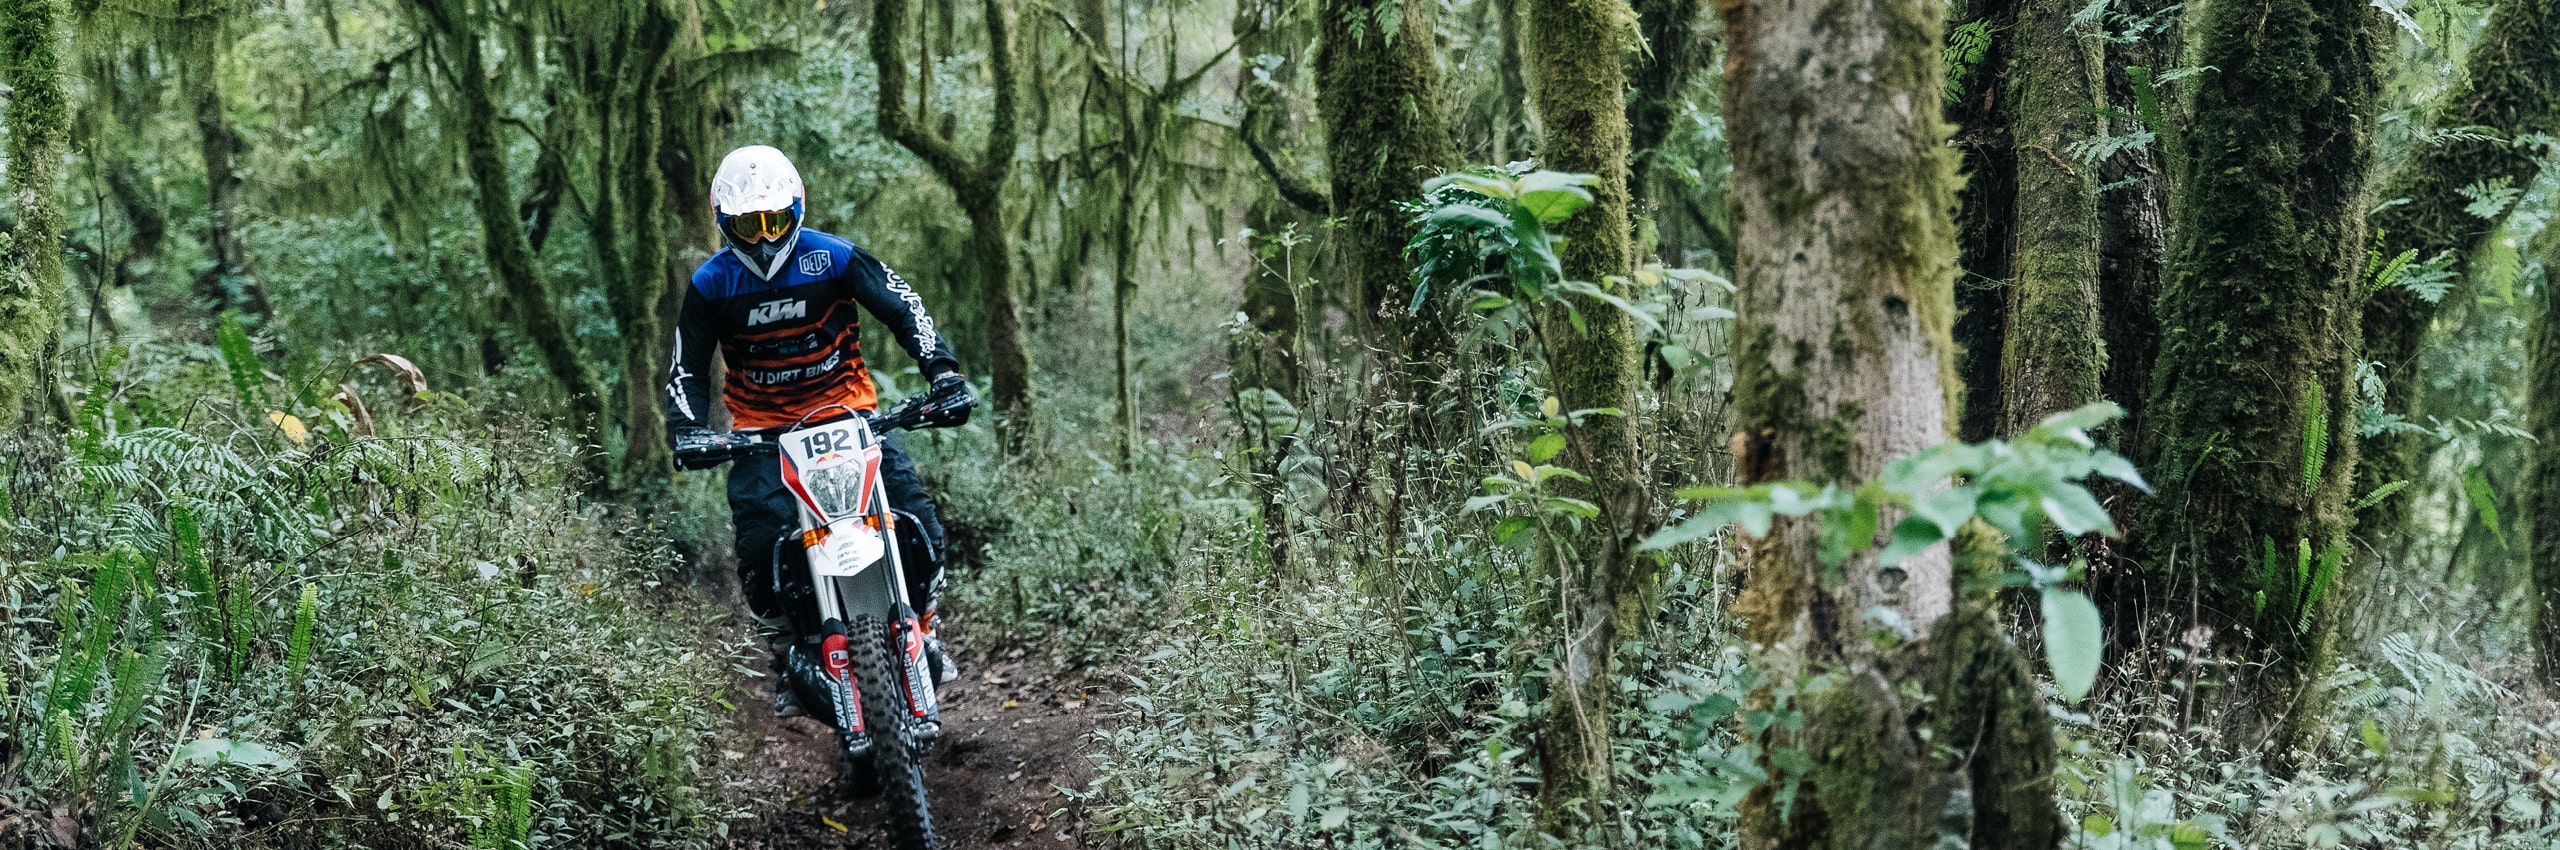 Bali_Dirt_Bikes_Kintamani_Forest_Slider1